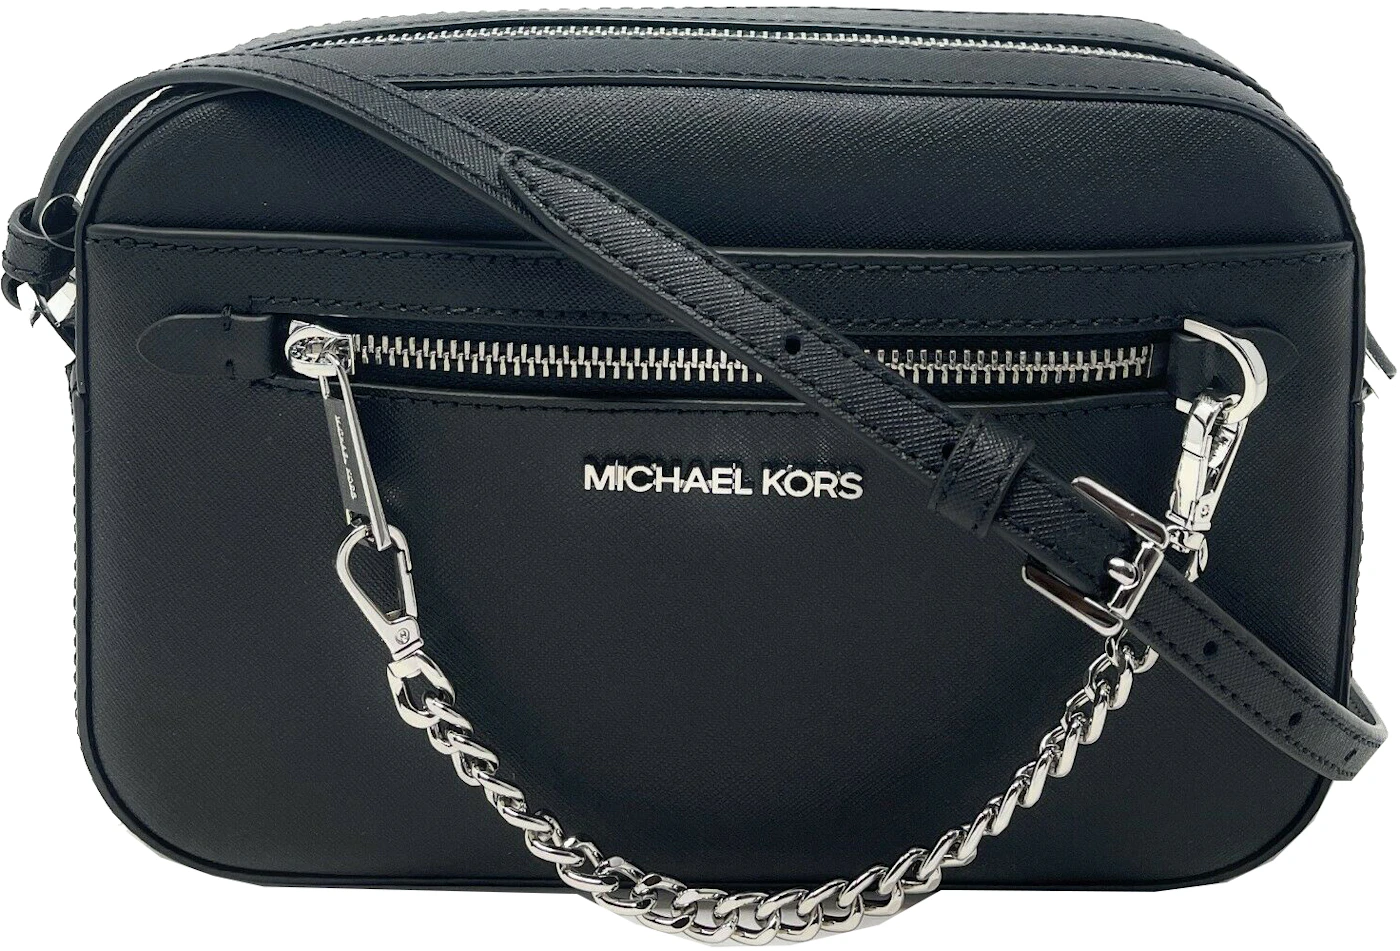 Michael Michael Kors Women's Jet Set Large Top-Zip Leather Tote - Black/Silver